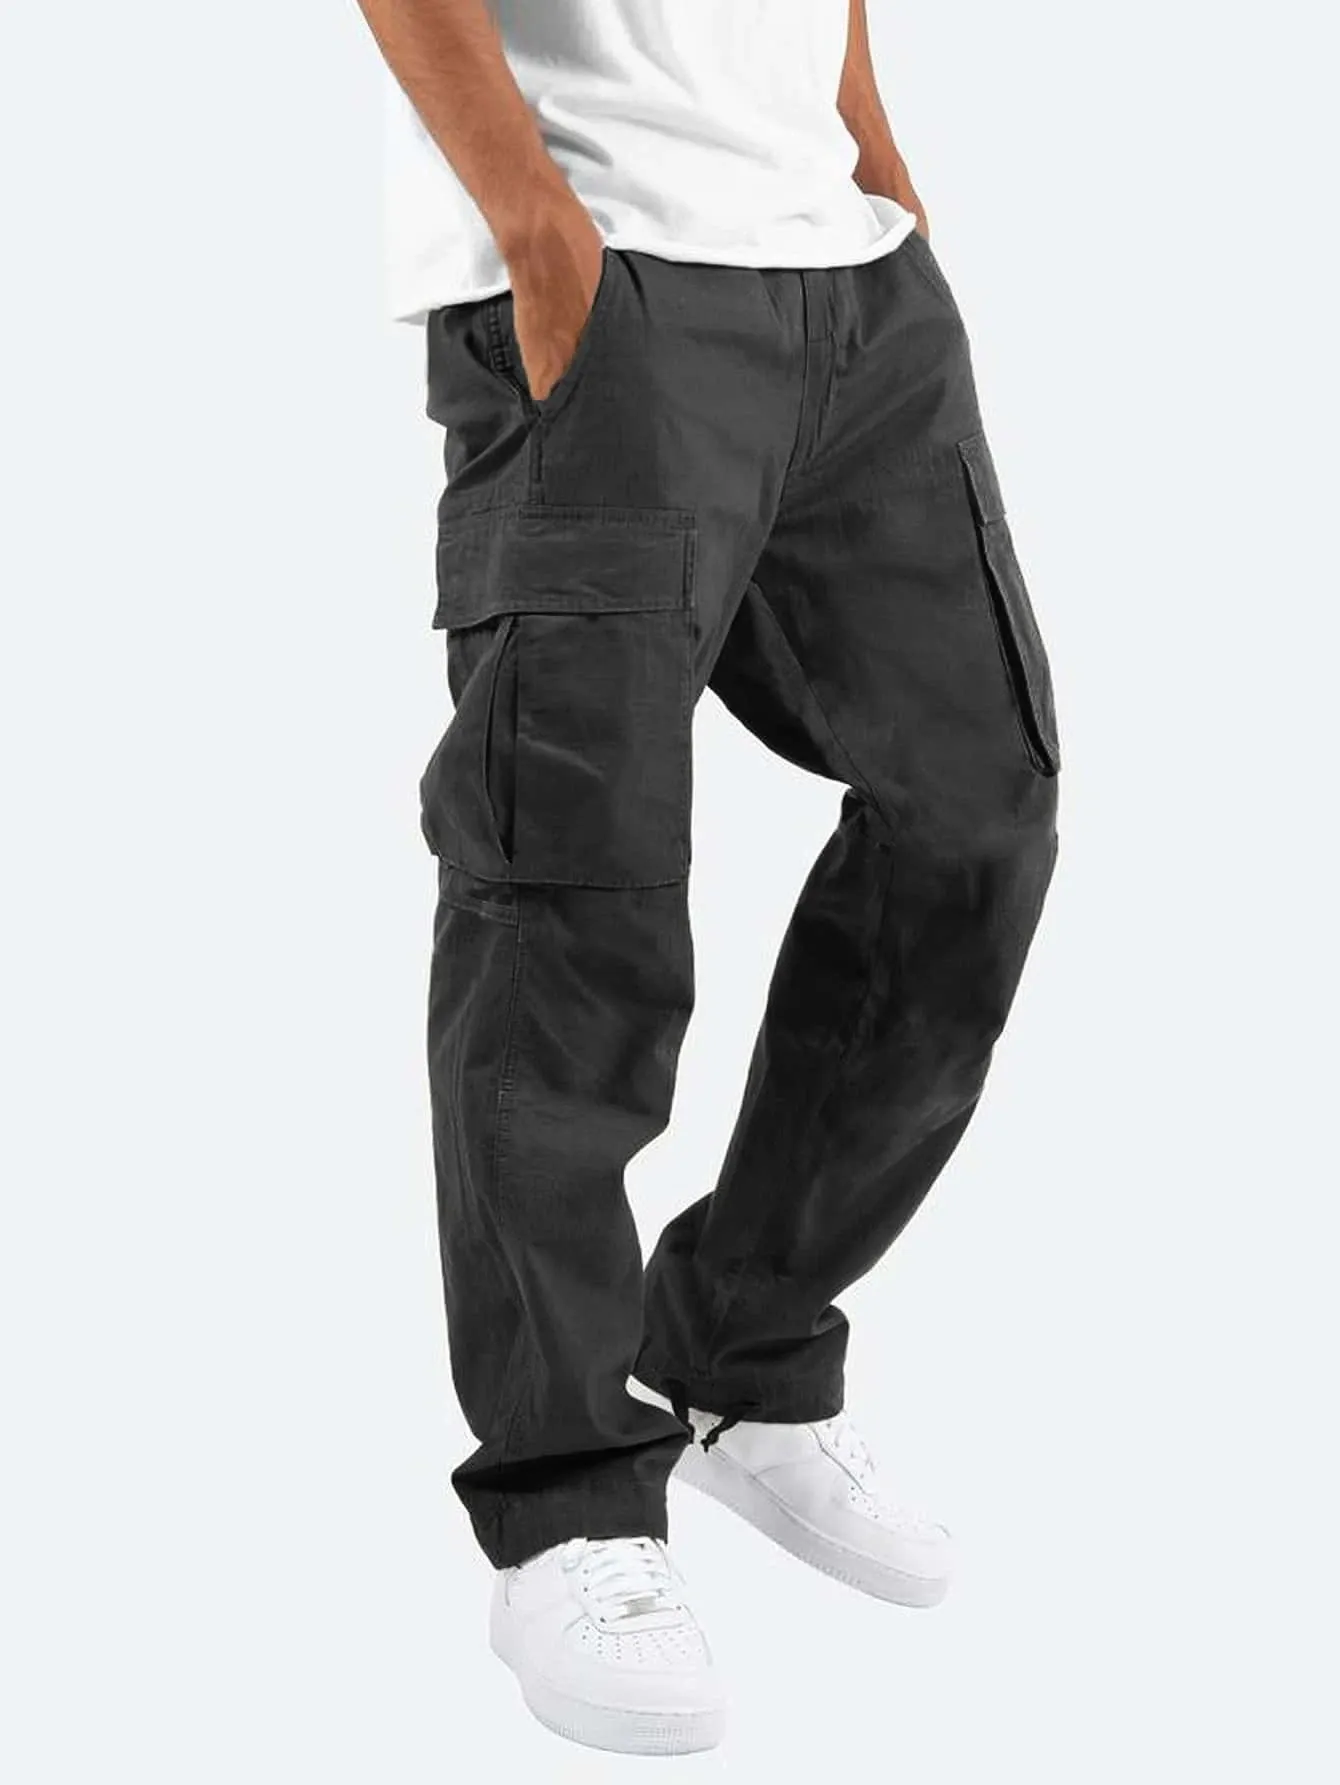 Designer Cargo Pants: Hip Hop Style, Multi Pocket Drawstring, Slim Fit,亚洲尺码M  5XL From Vogo_fashions, $14.73 | DHgate.Com